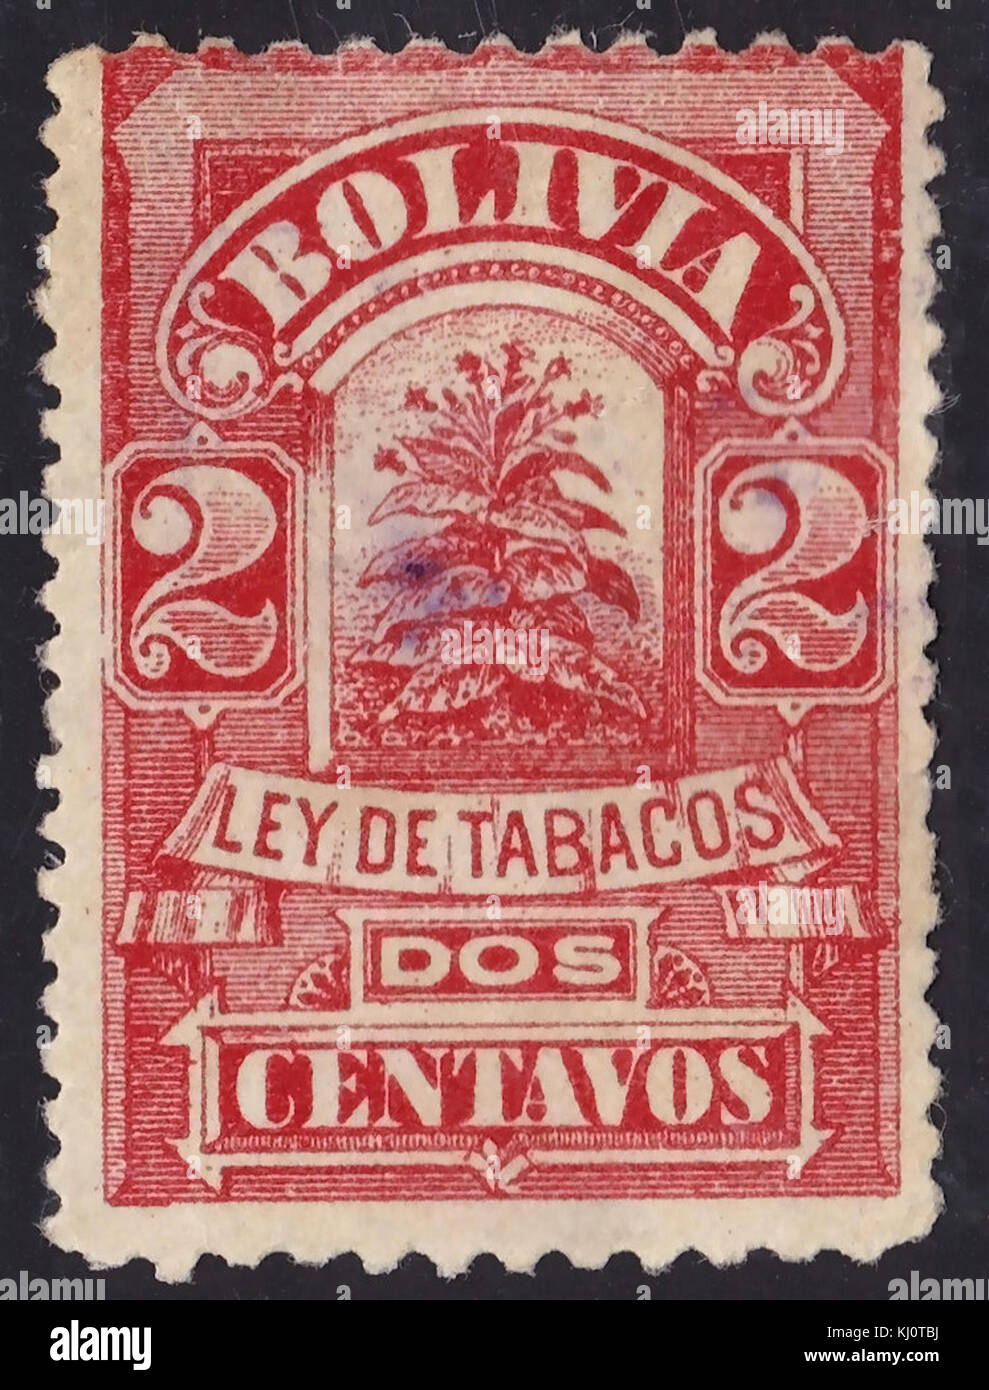 Bolivia 1895 2c tobacco revenue stamp Stock Photo